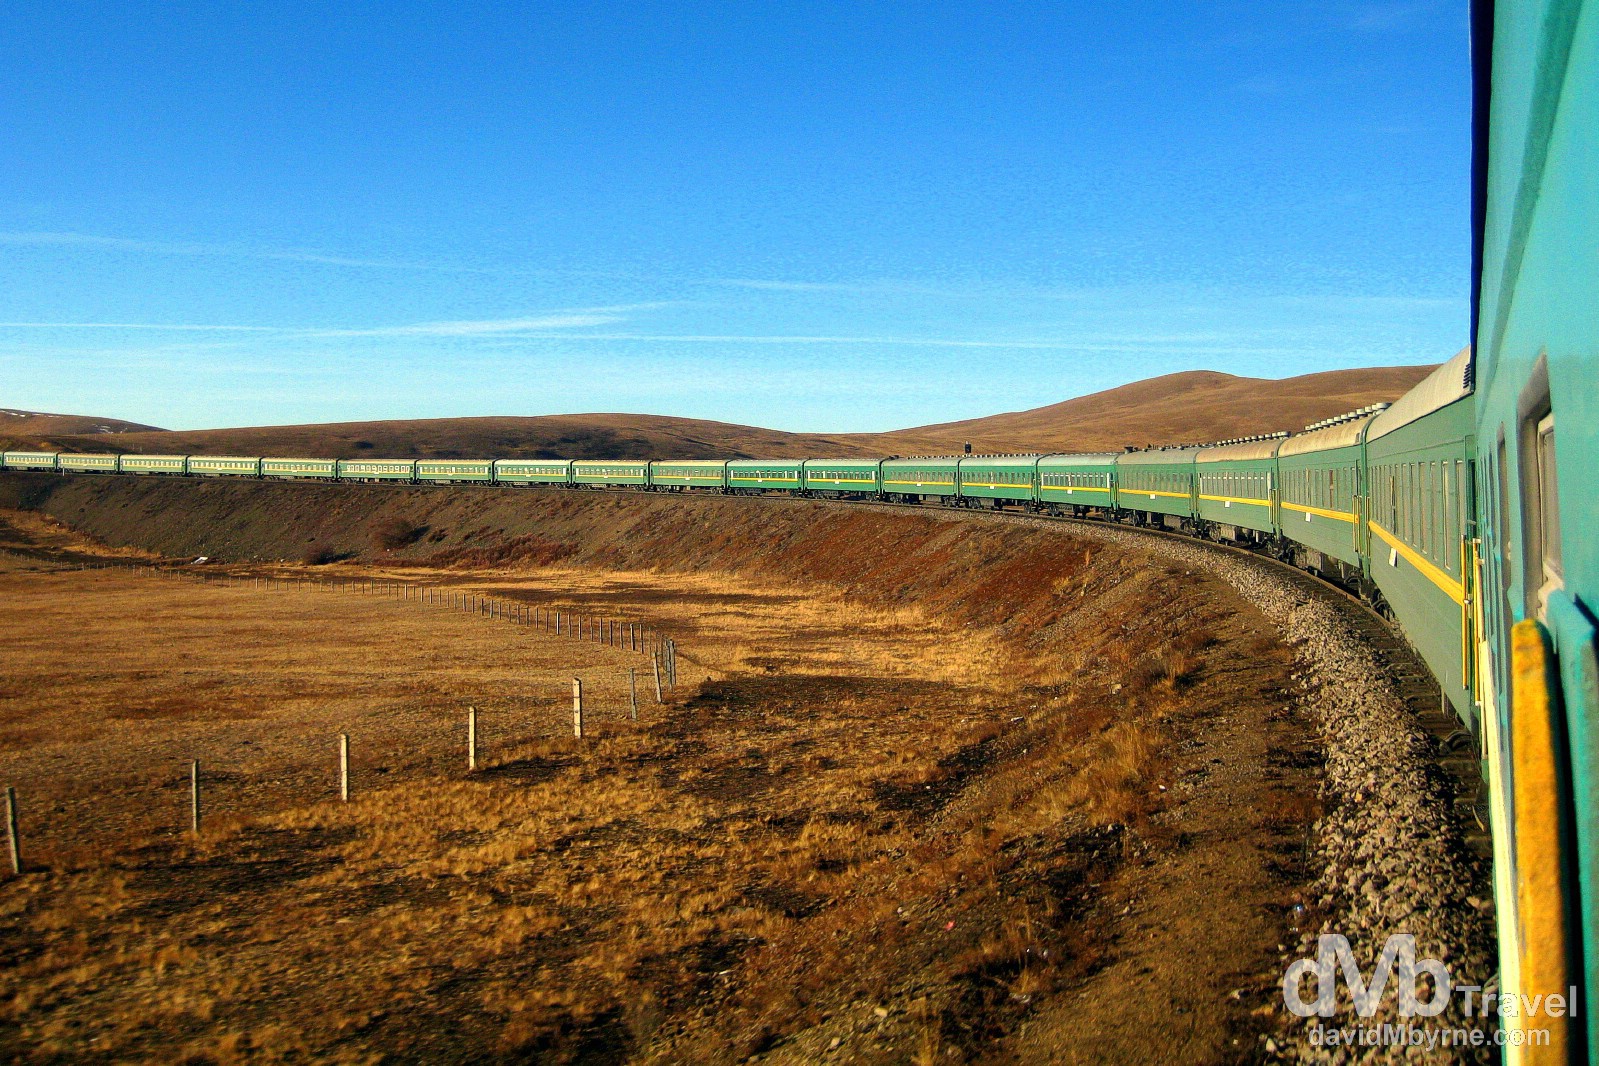 The Ulan Bator-bound train winding its way through the Mongolian grasslands. October 31st 2012.